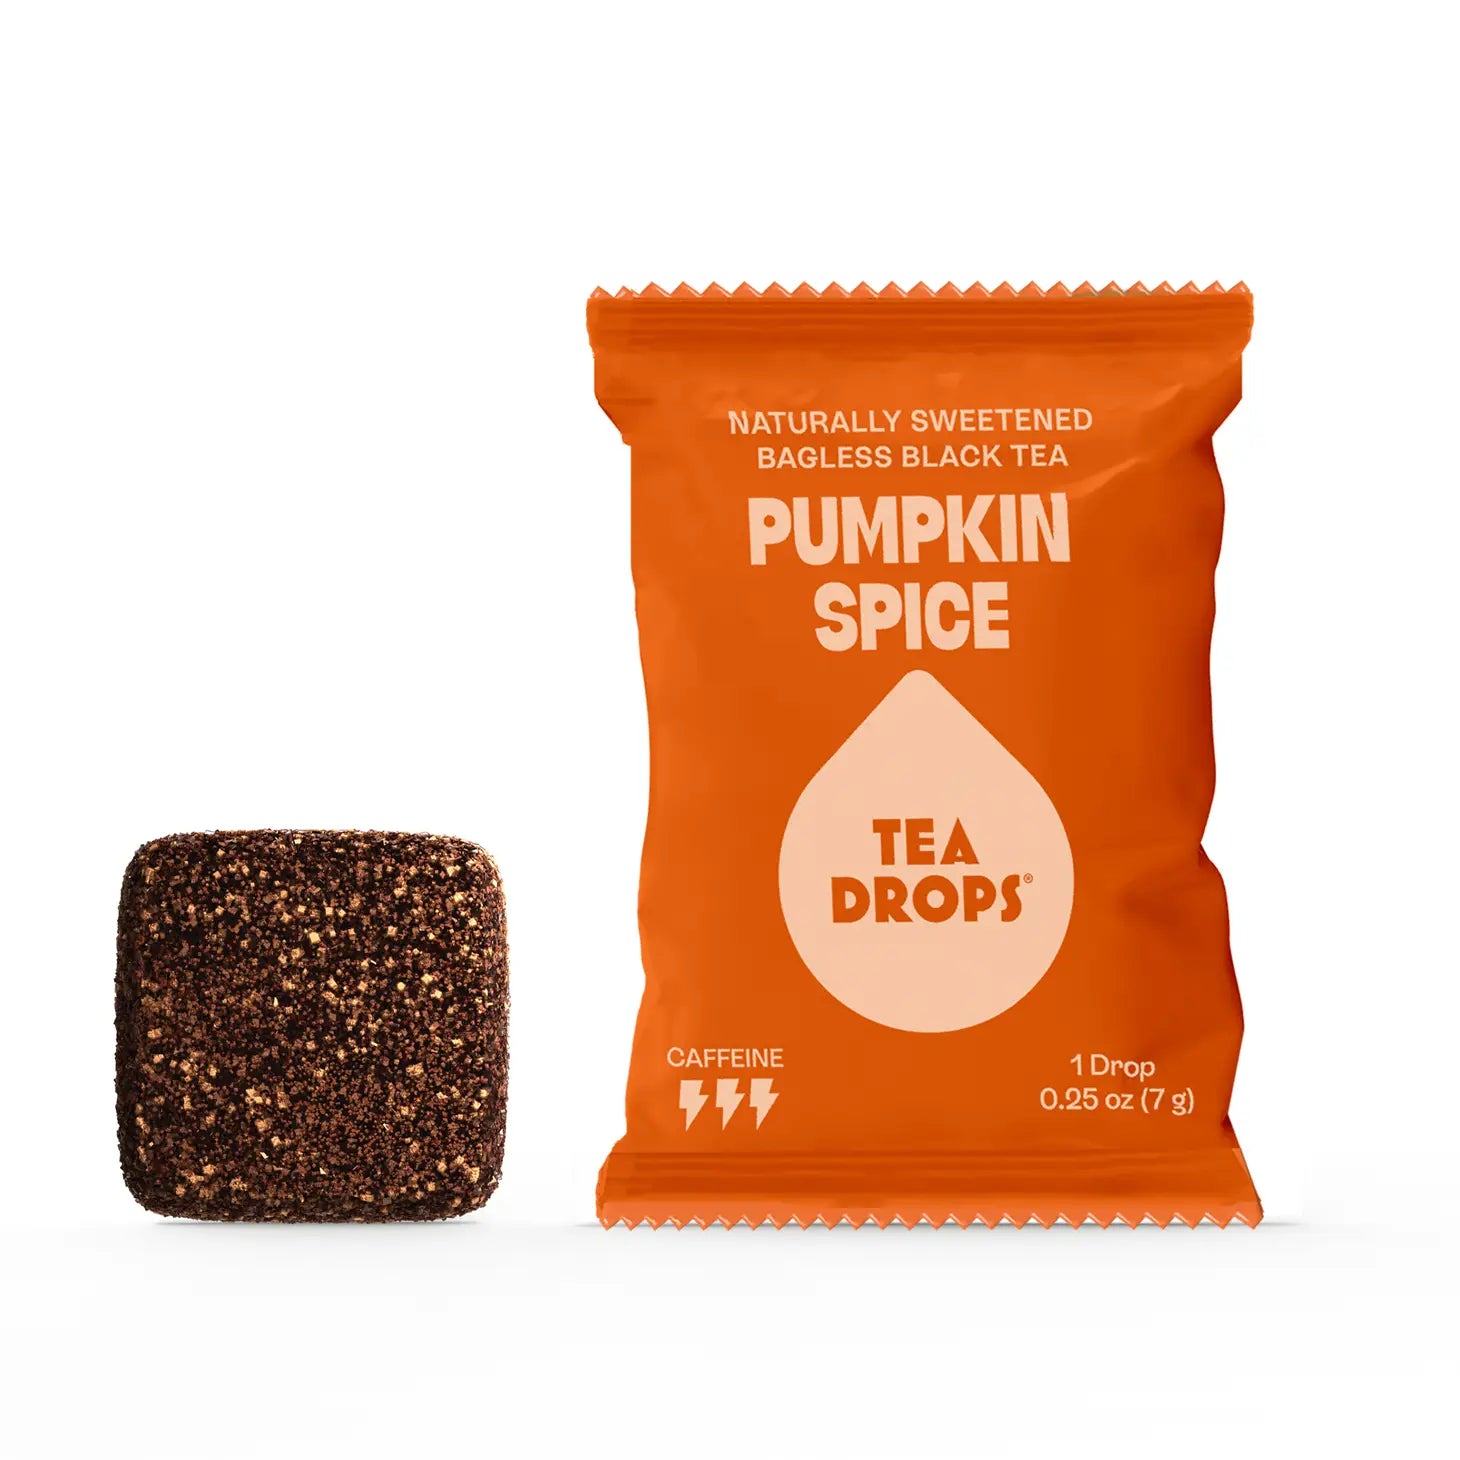 Pumpkin Spice Tea Drop next to orange packaging.